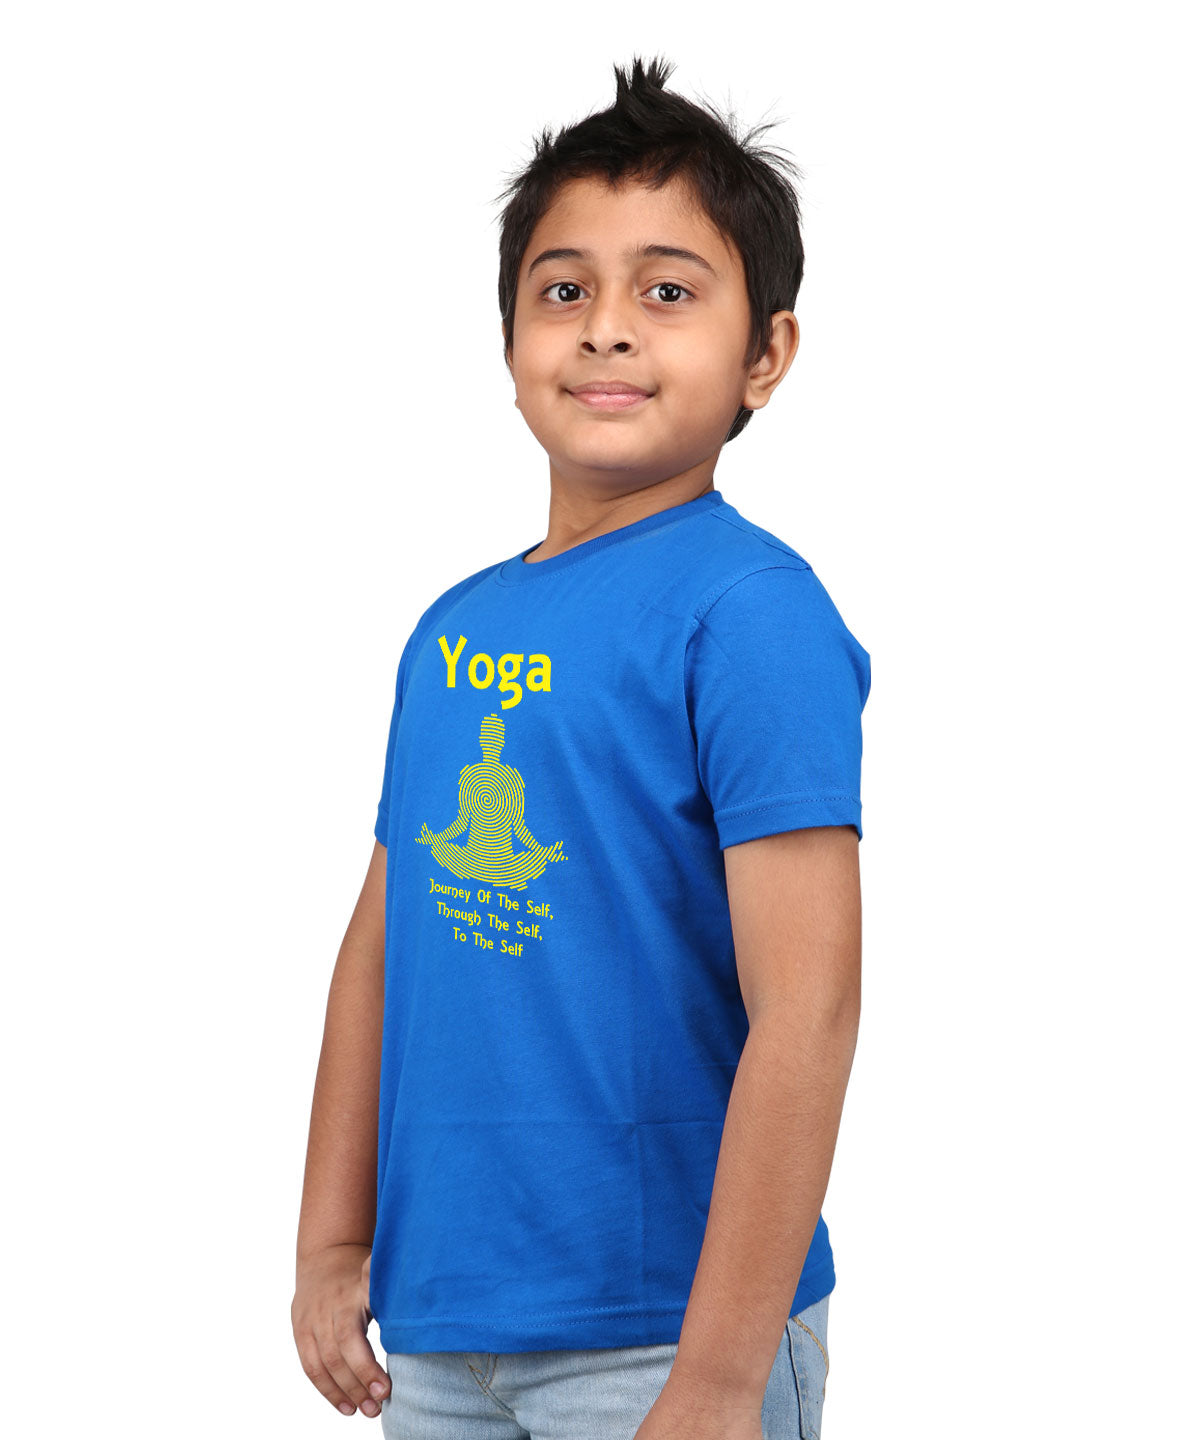 Yoga Journey And Through - Premium Round Neck Cotton Tees for Juniors - Electric Blue